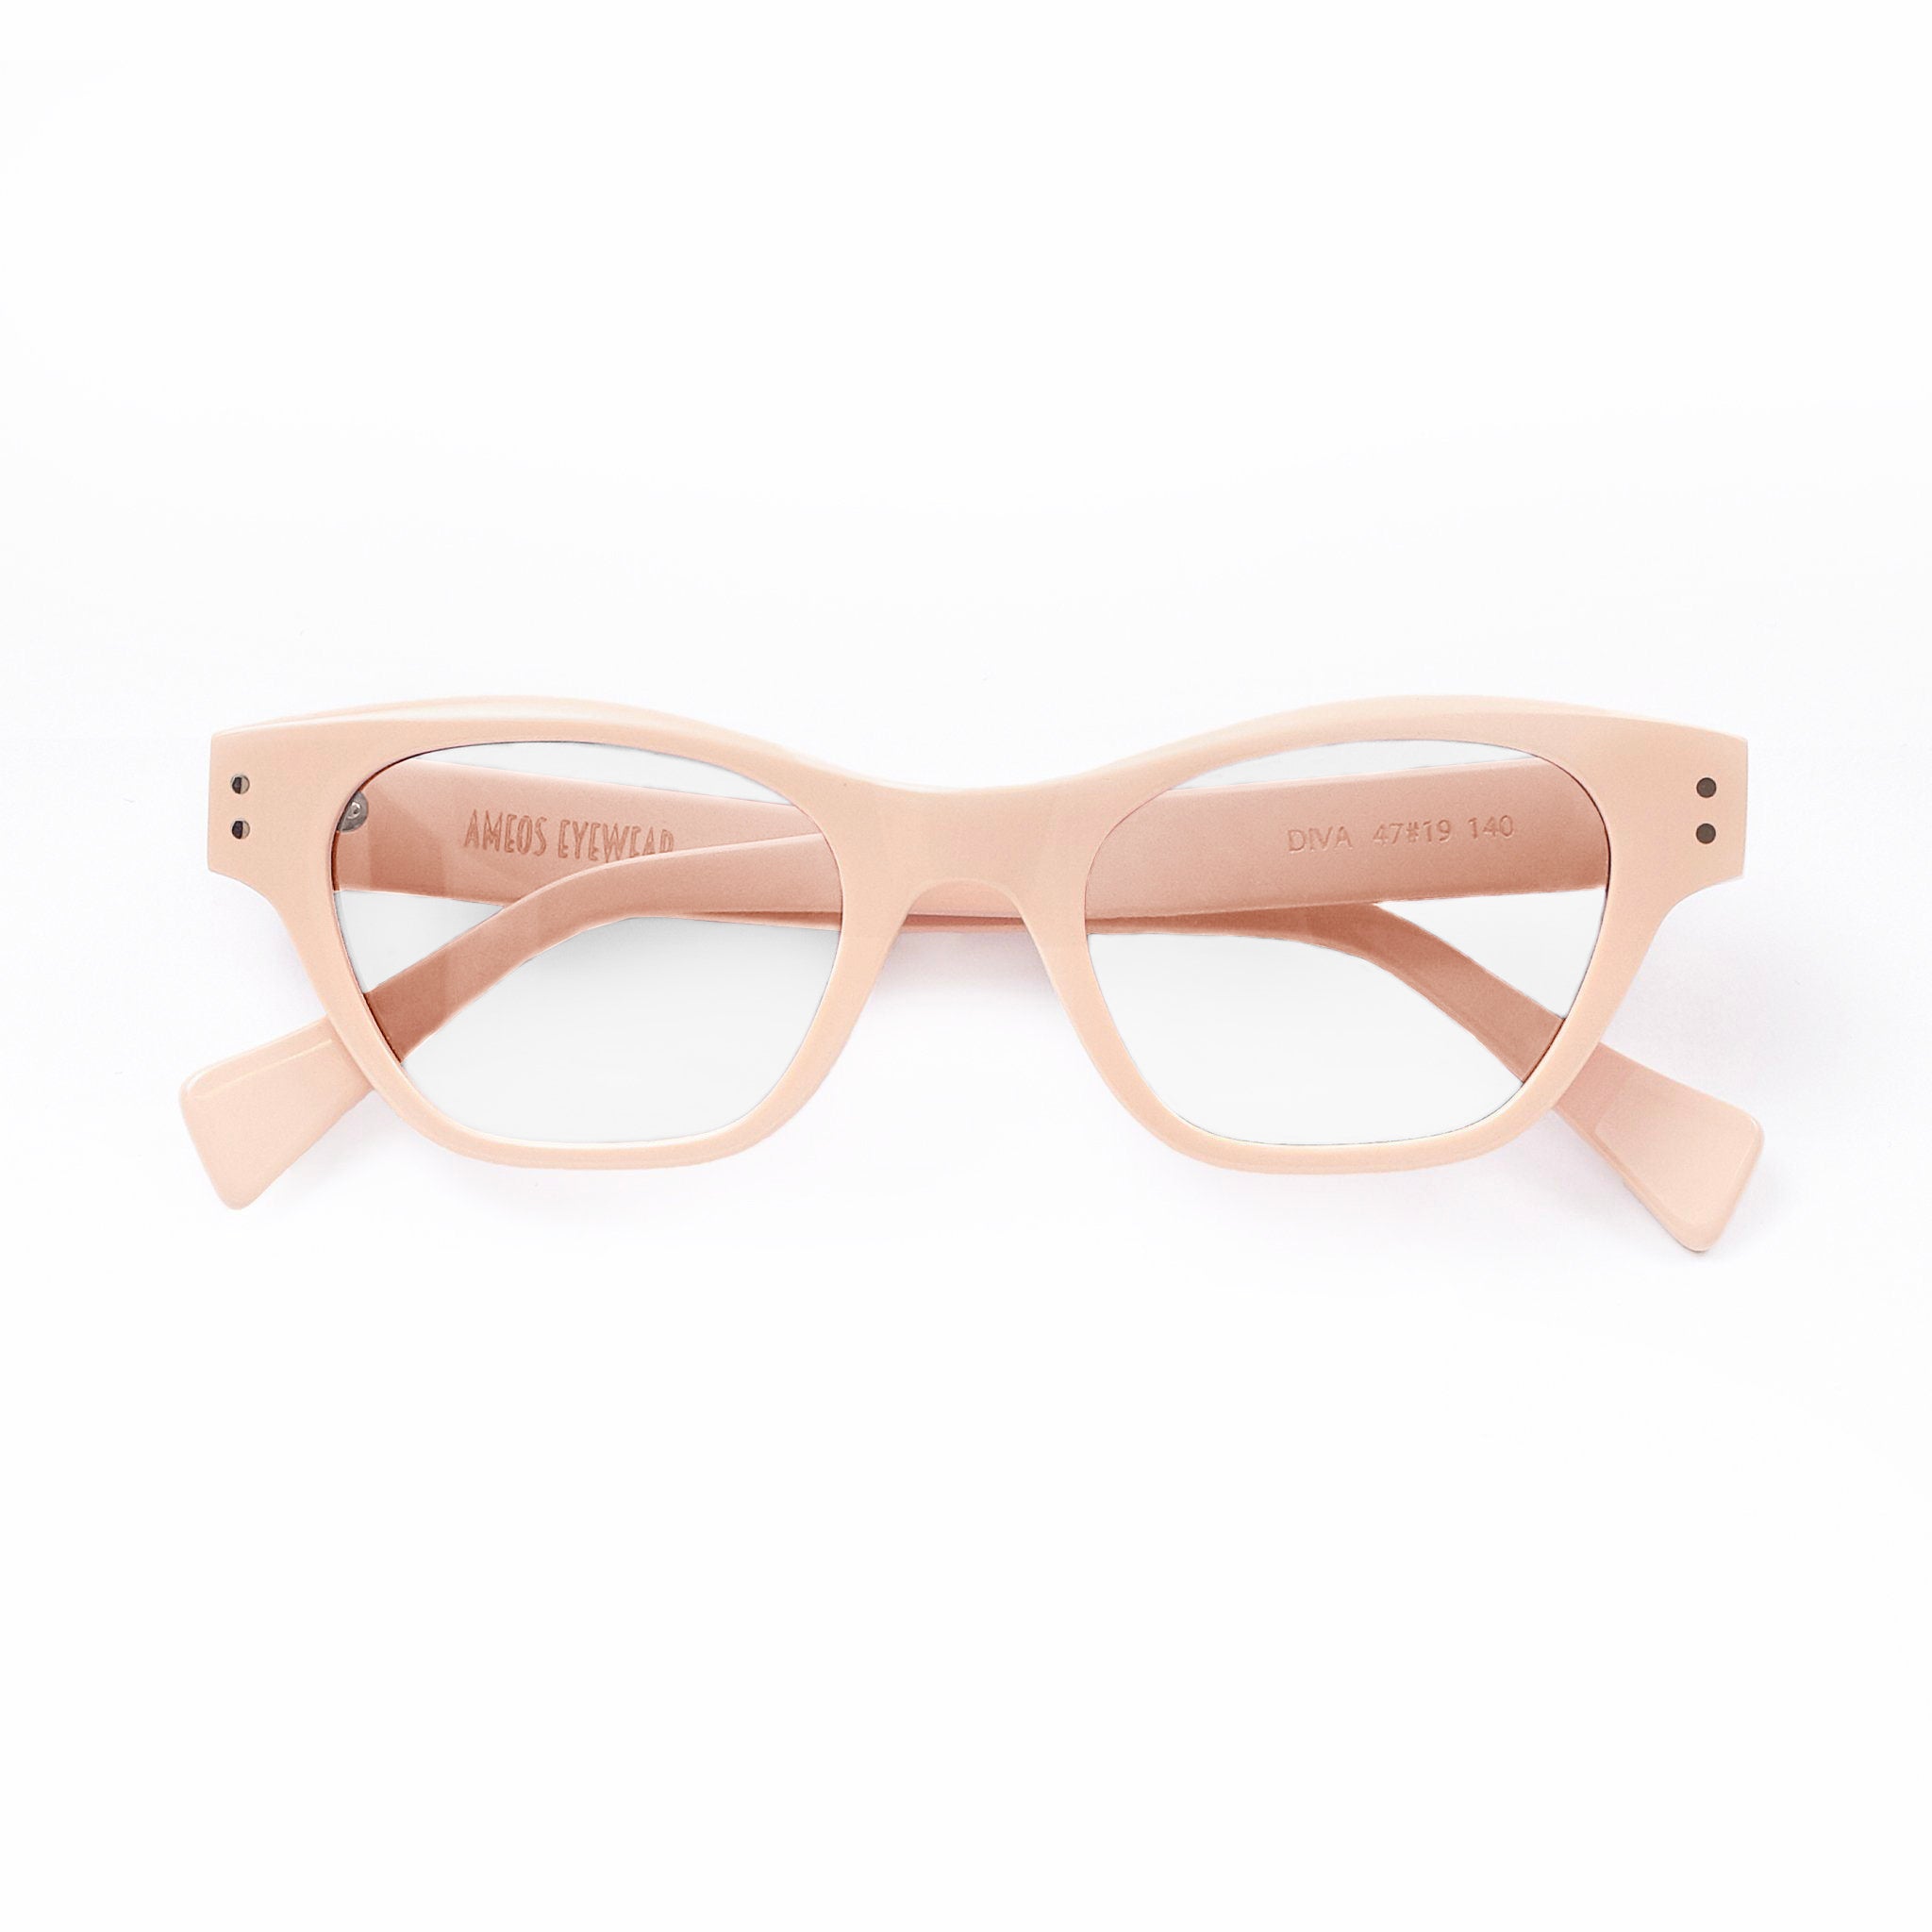 Ameos Eyewear nude cat-eye optical glasses. handmade in italy and unisex.